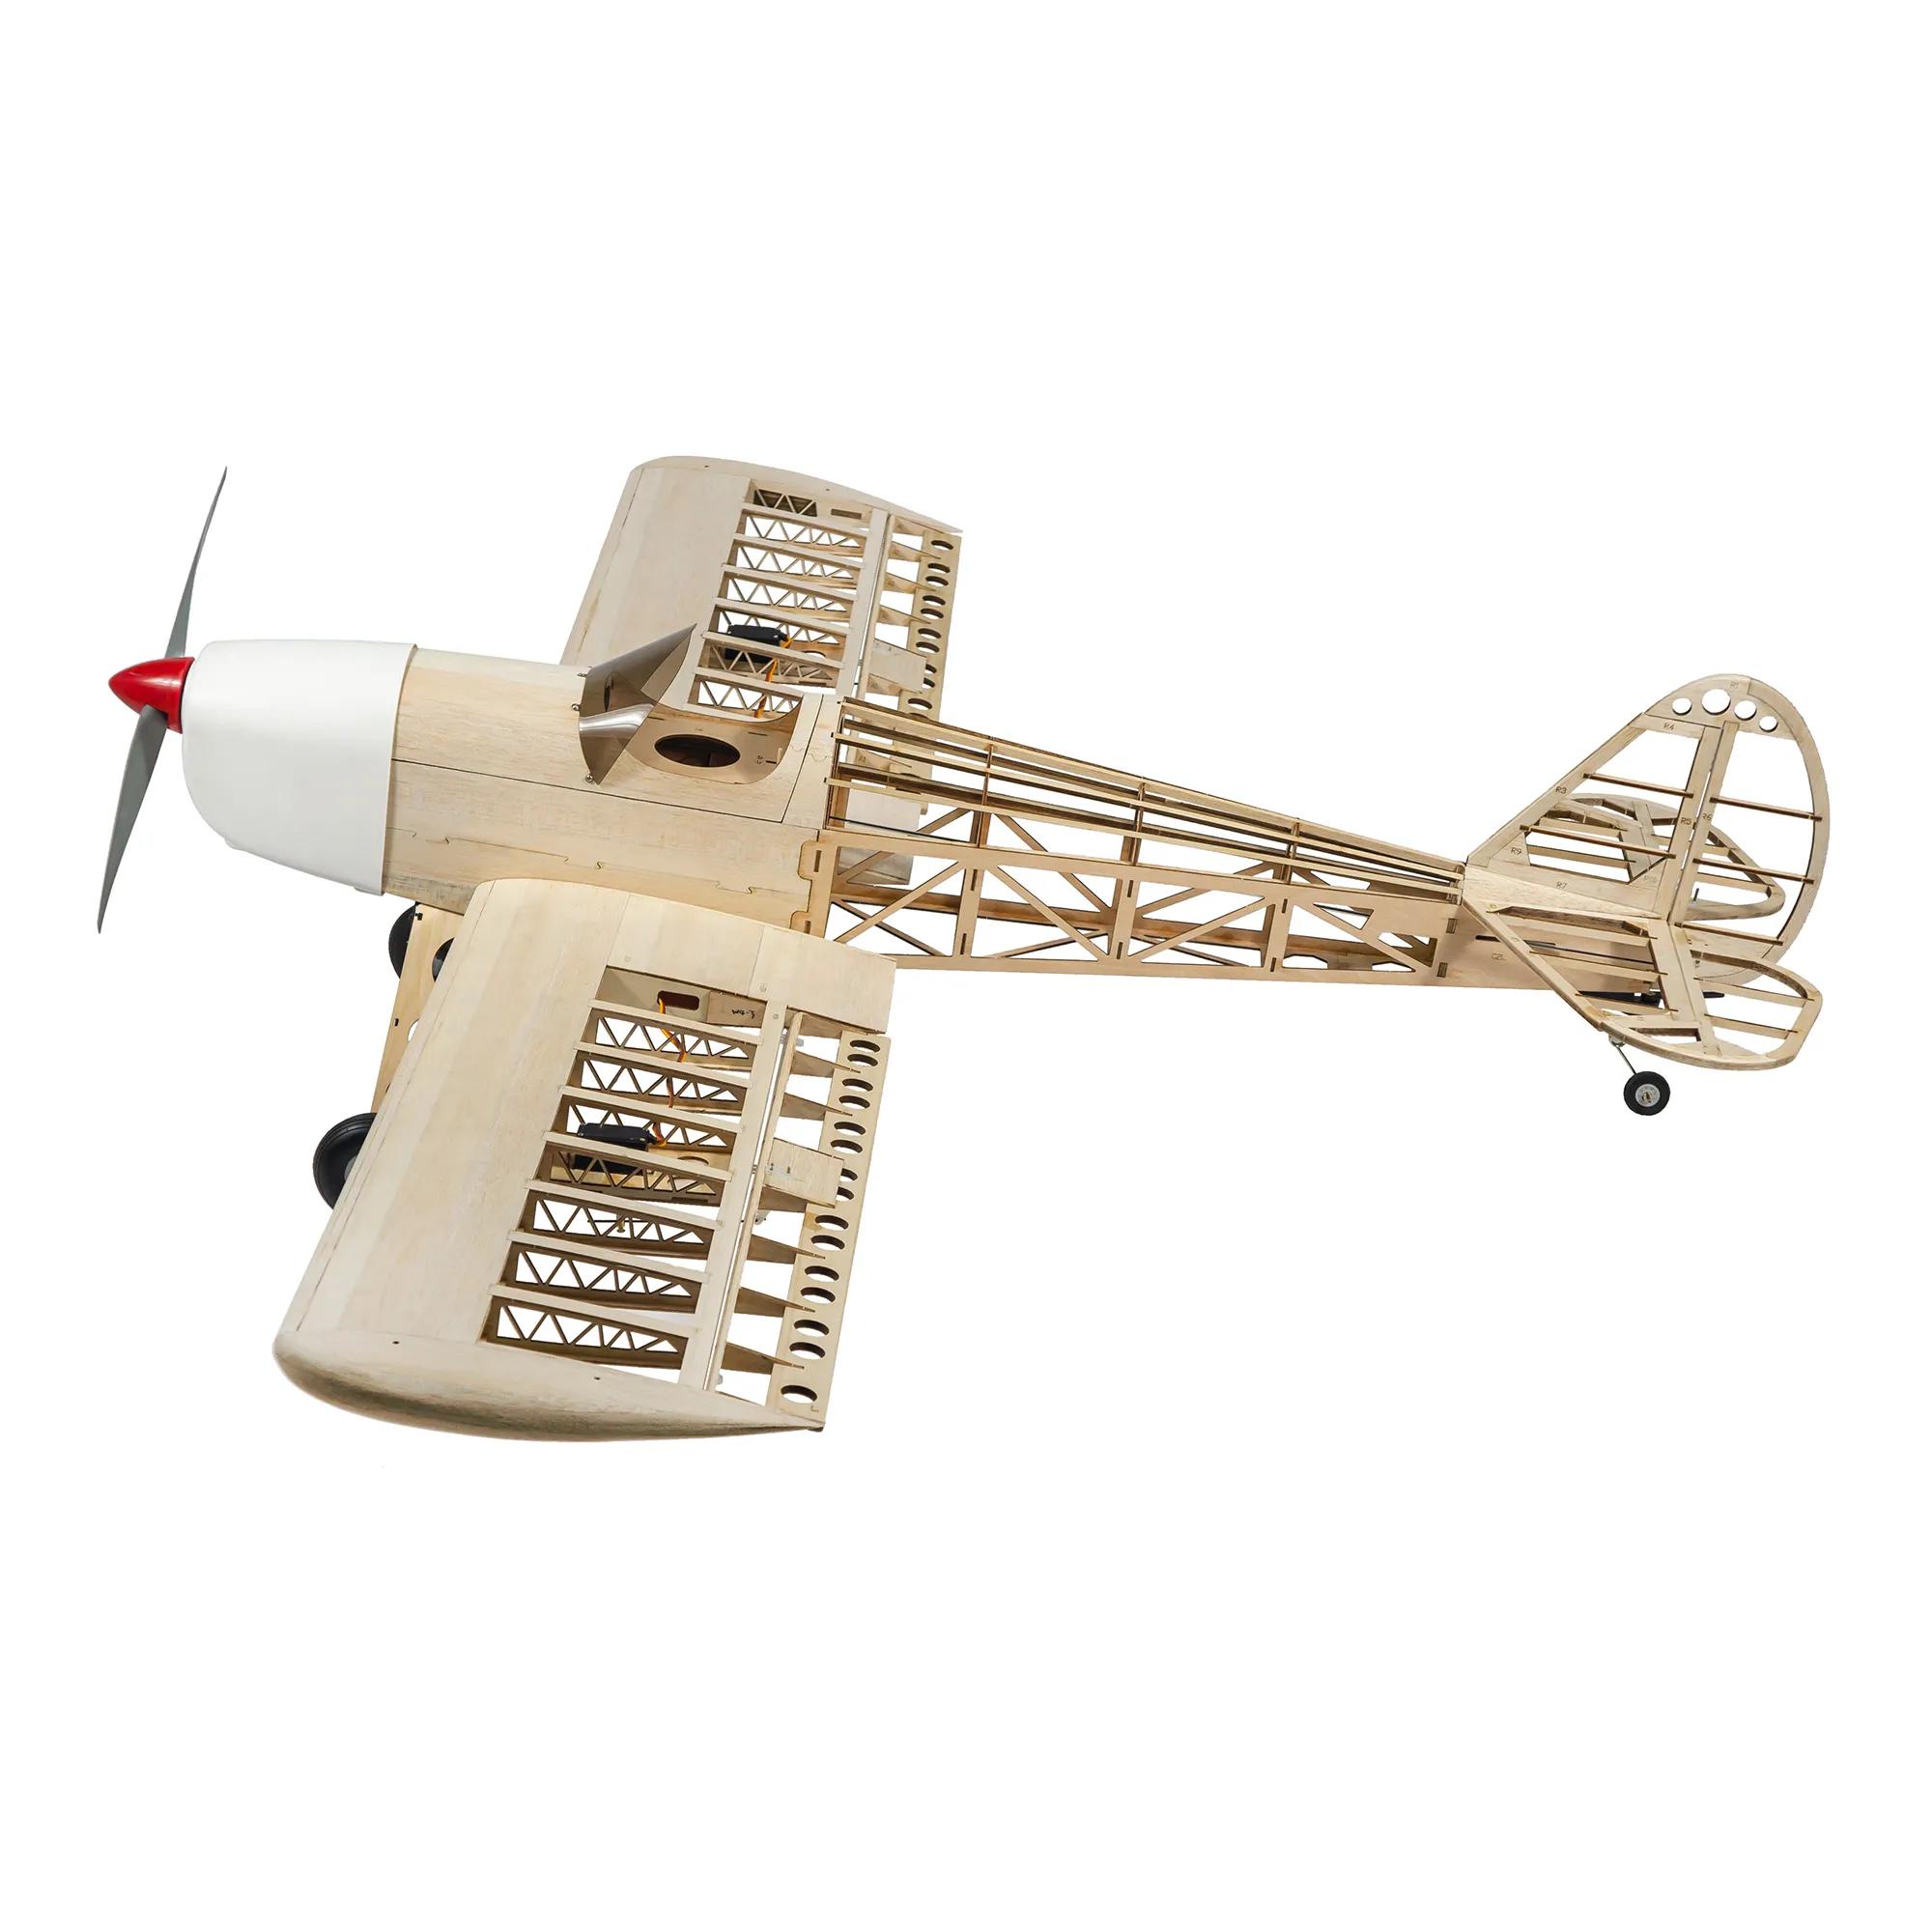 Covering Balsa Wood Model Airplanes: Various covering materials for balsa wood model airplanes